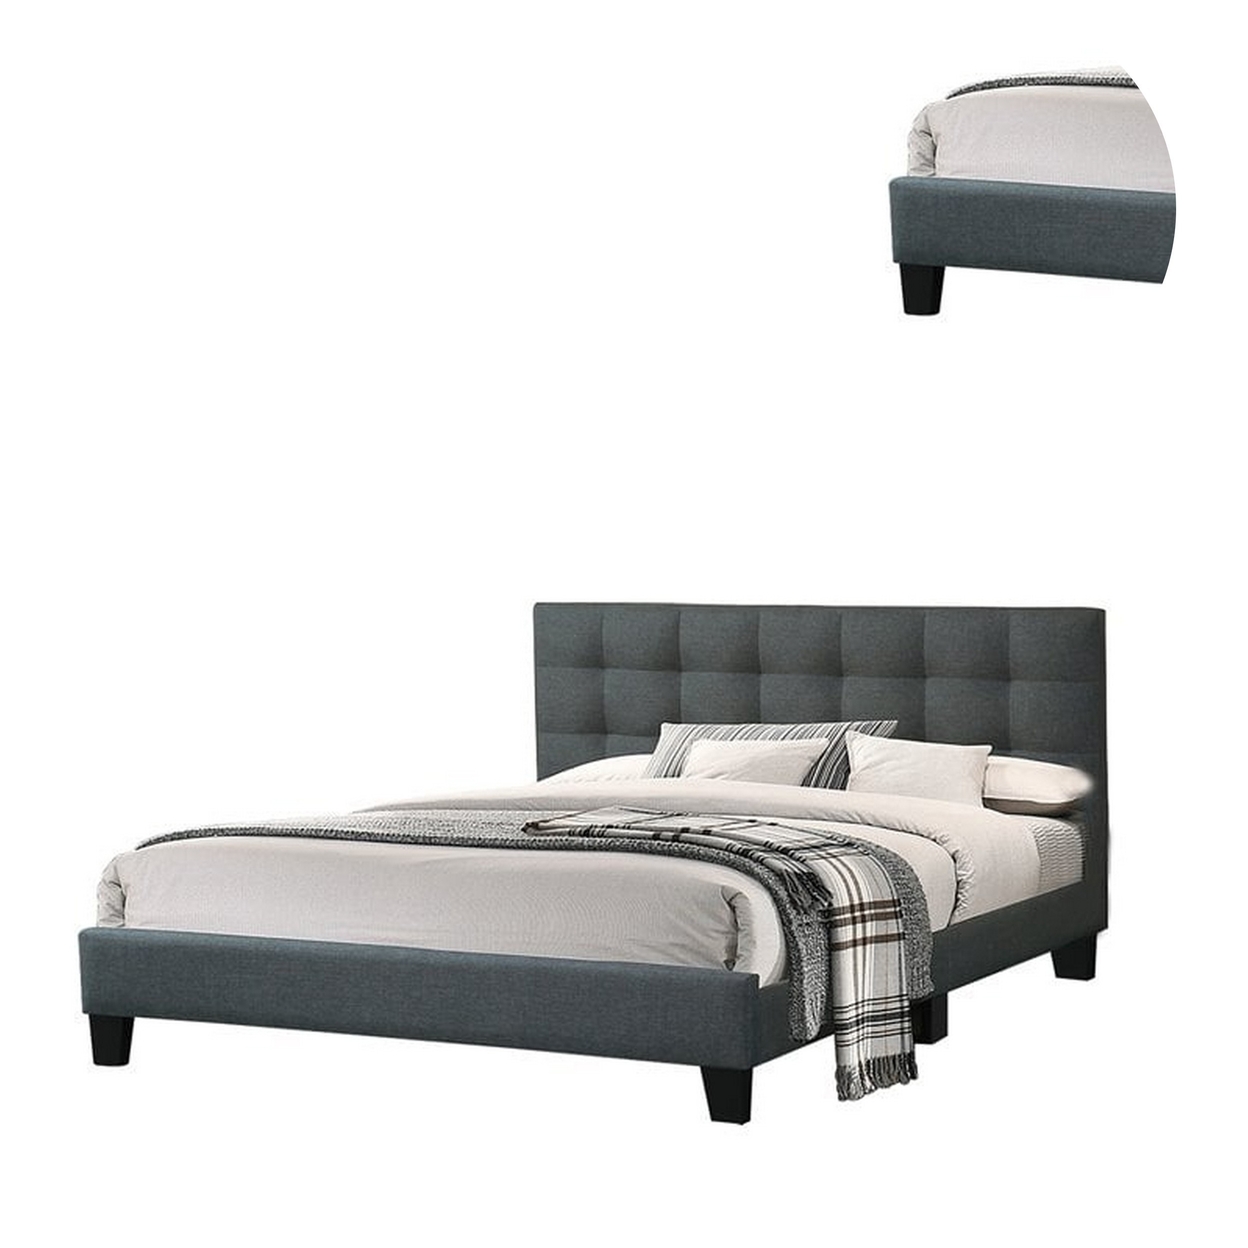 Dex Modern Platform King Size Bed, Plush Tufted Upholstery, Charcoal Gray- Saltoro Sherpi